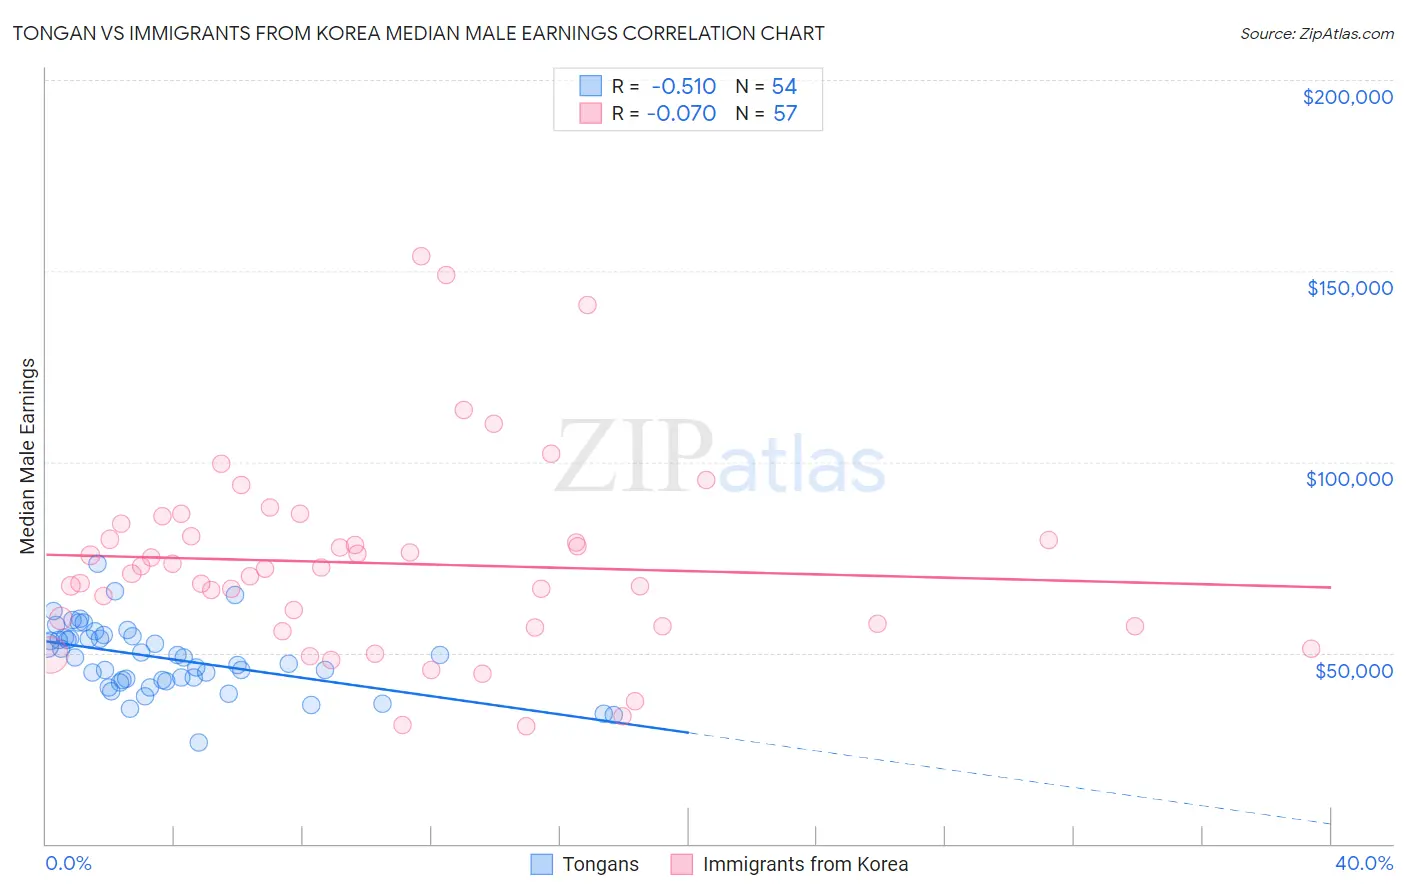 Tongan vs Immigrants from Korea Median Male Earnings